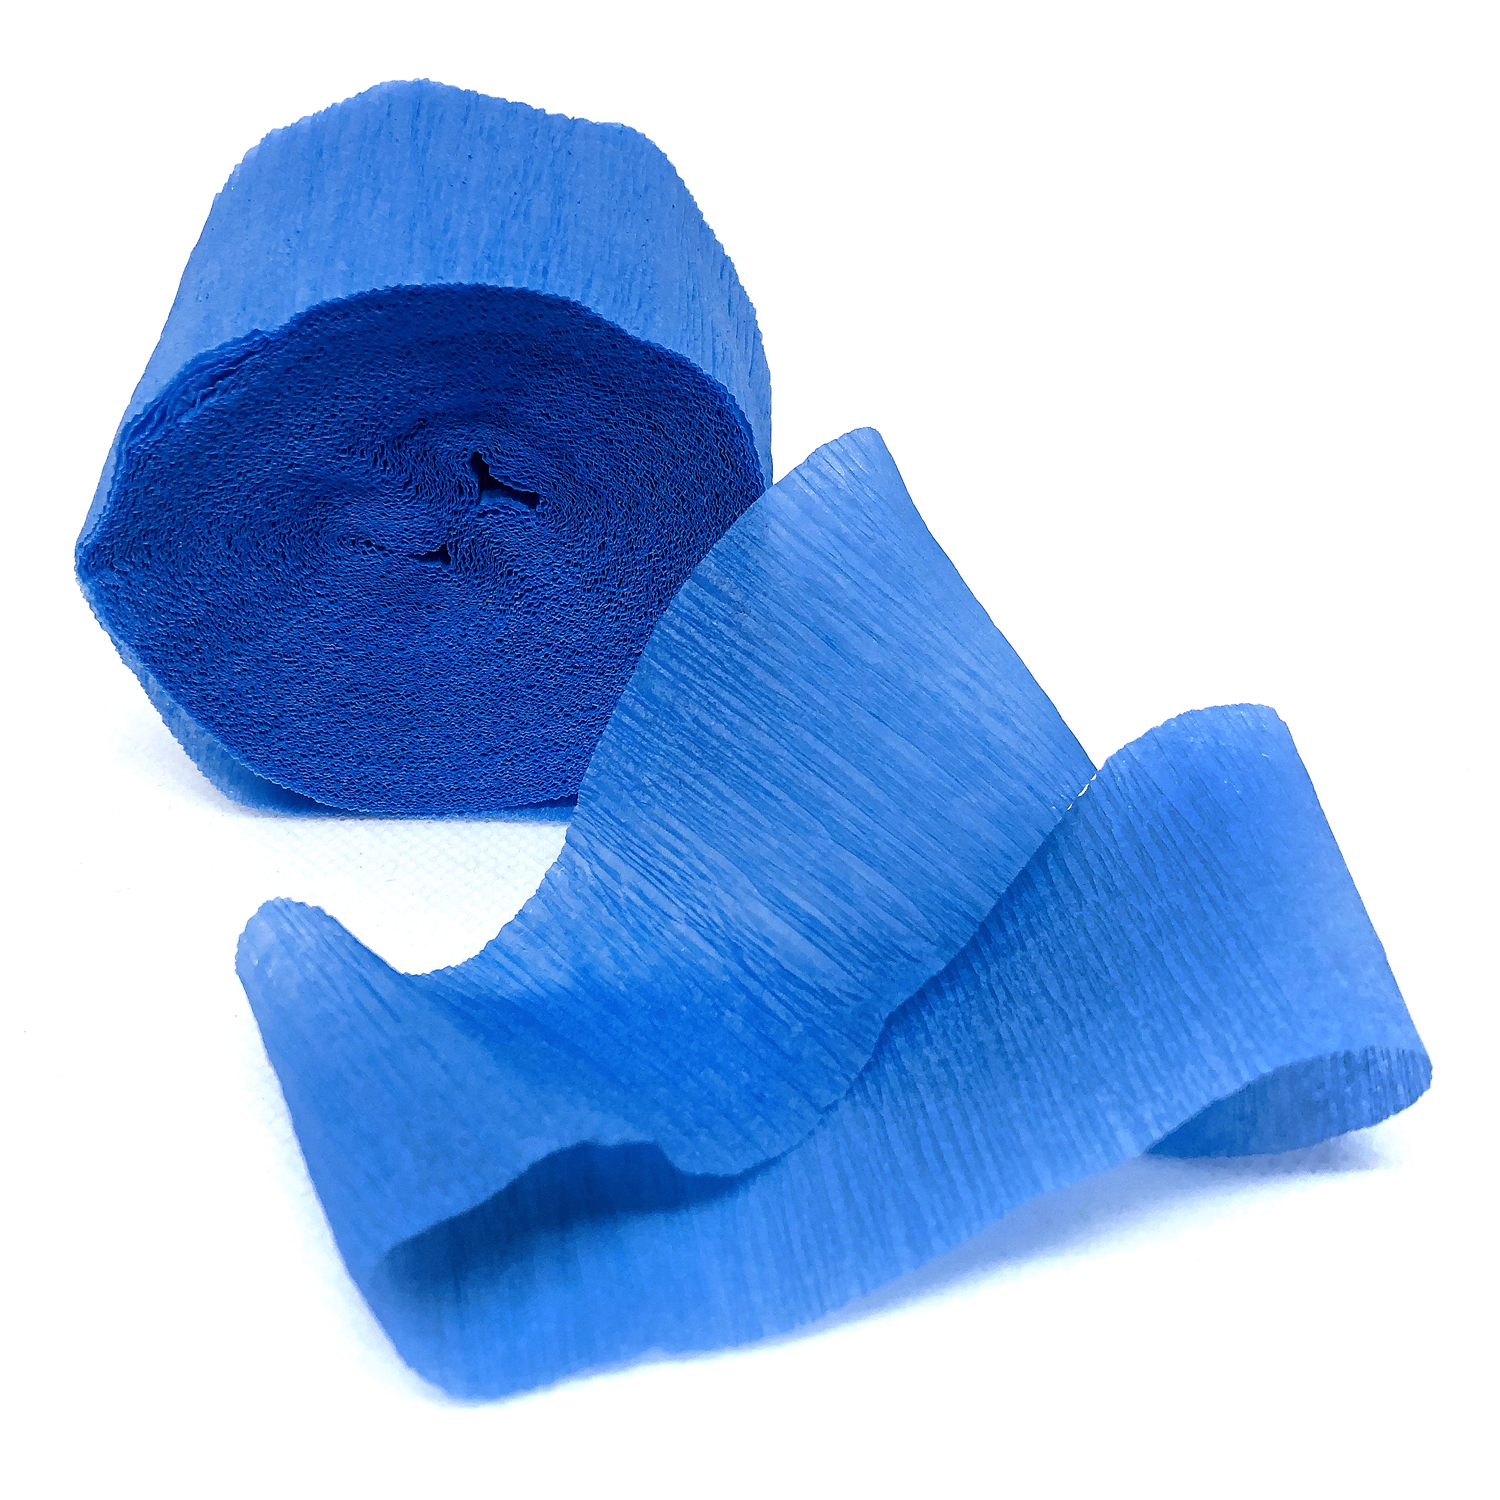 Crepe Paper Roll - Blue (3 pack) - Scrap - Centre of Creative Reuse